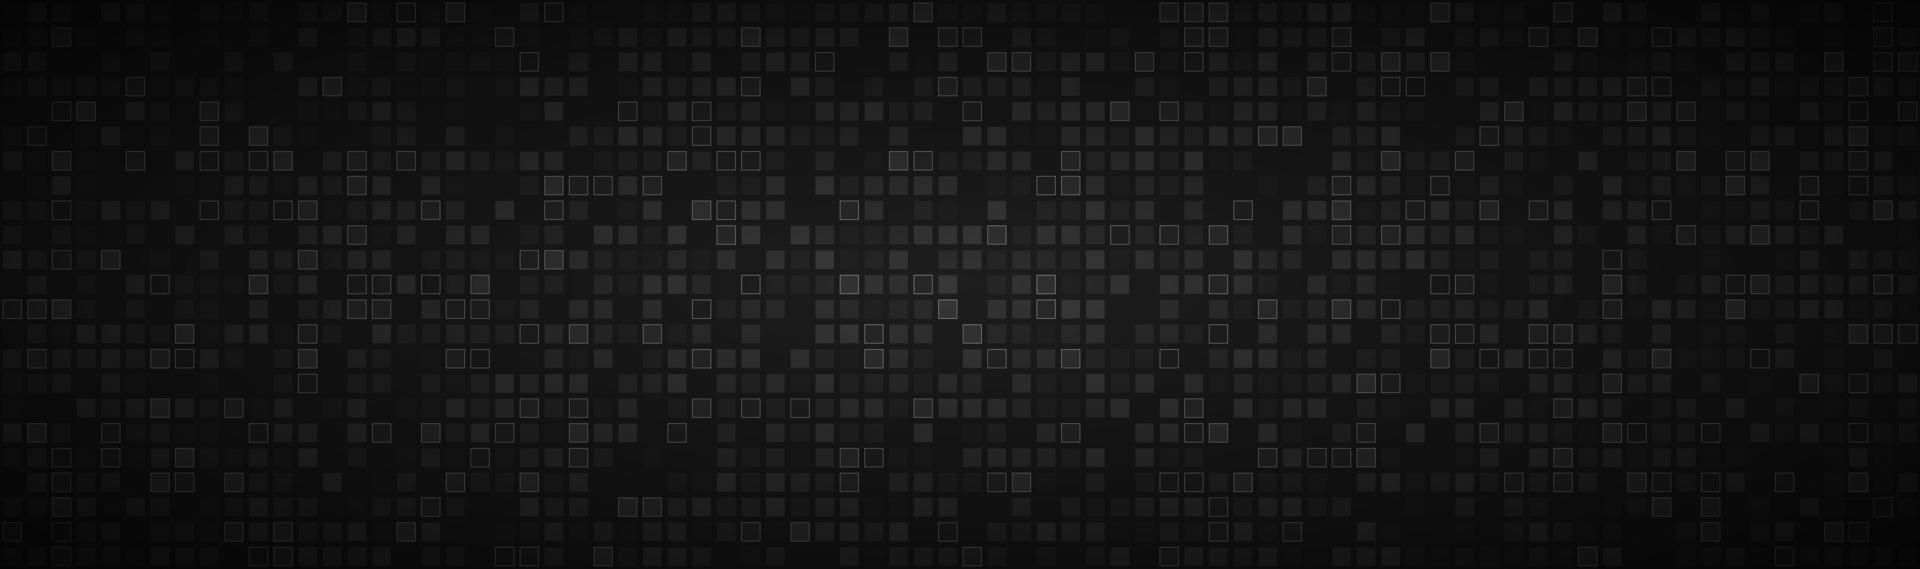 Encabezado abstracto negro con cuadrados transparentes mosaico look banner ilustración vectorial moderna vector